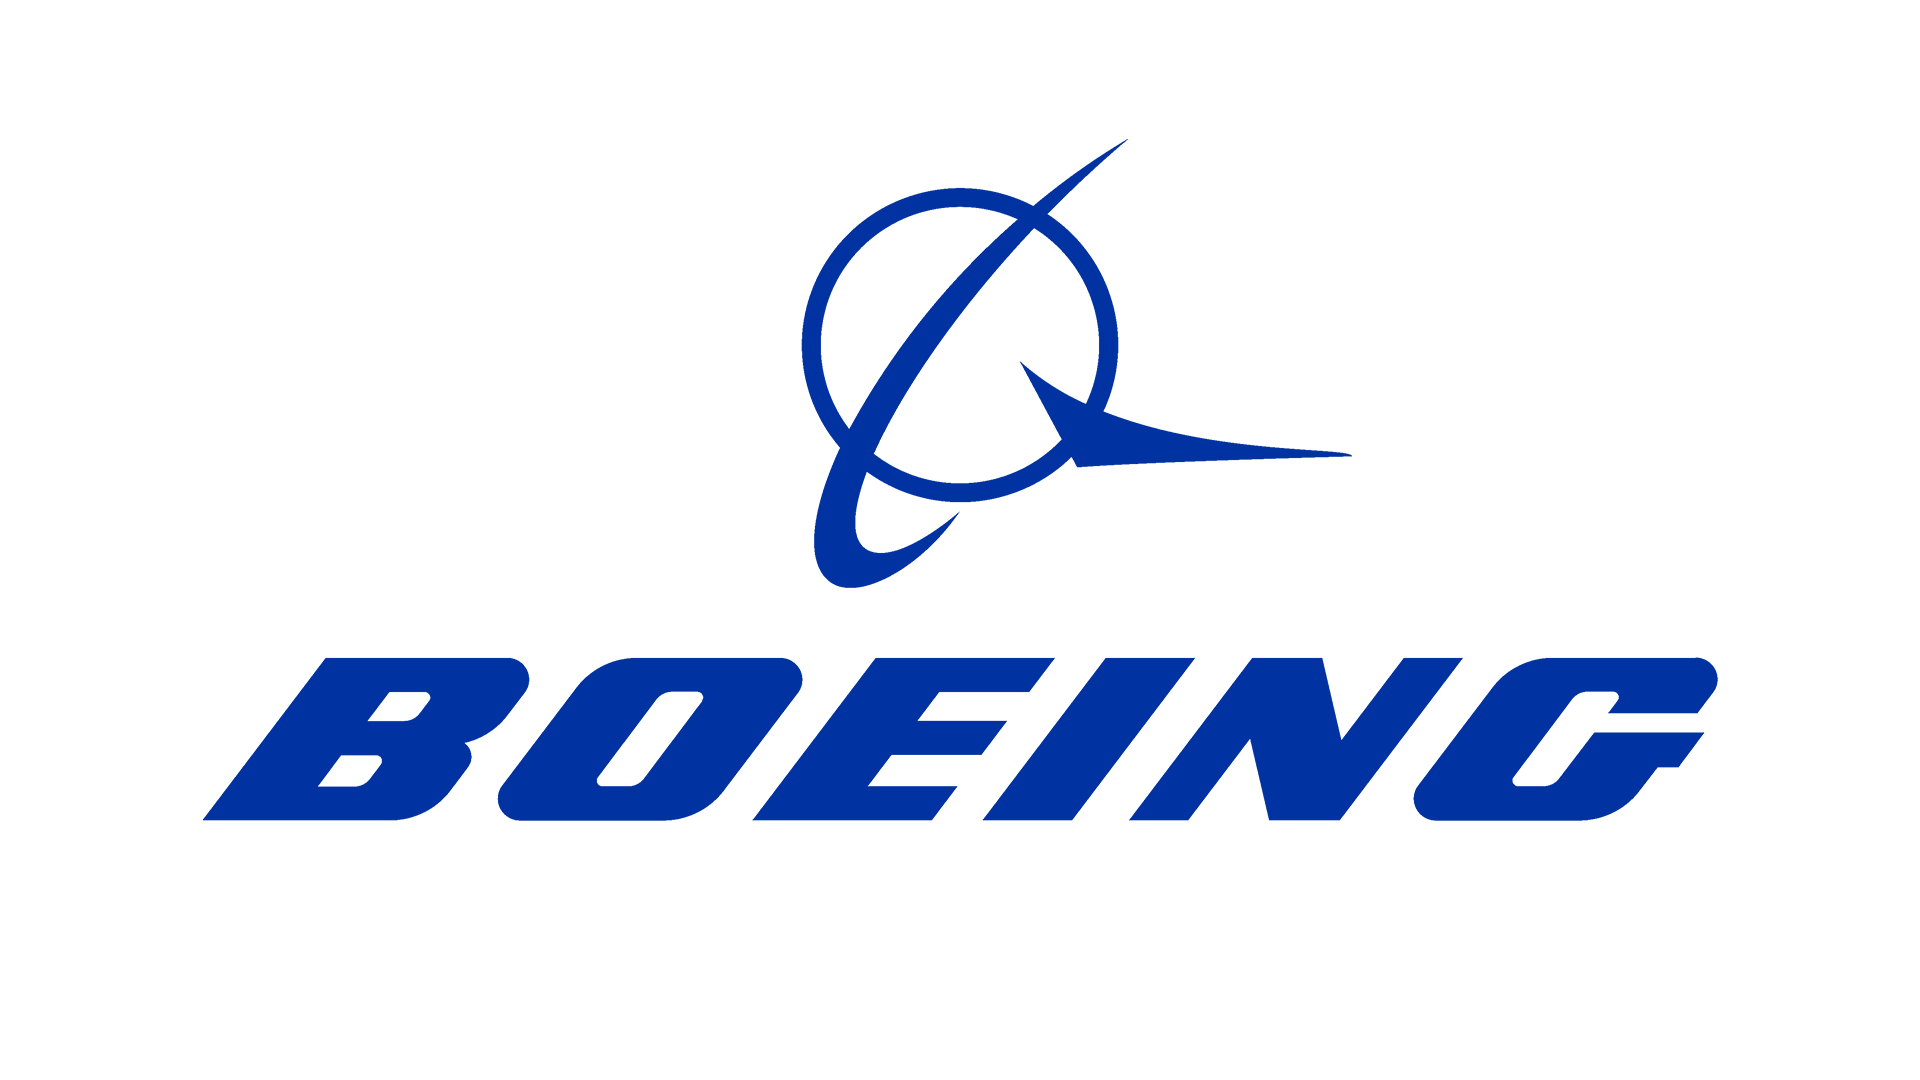 Boeing ได้รับอนุมัติโครงการเครือข่ายดาวเทียมบรอดแบนด์จาก กสทช. สหรัฐฯ